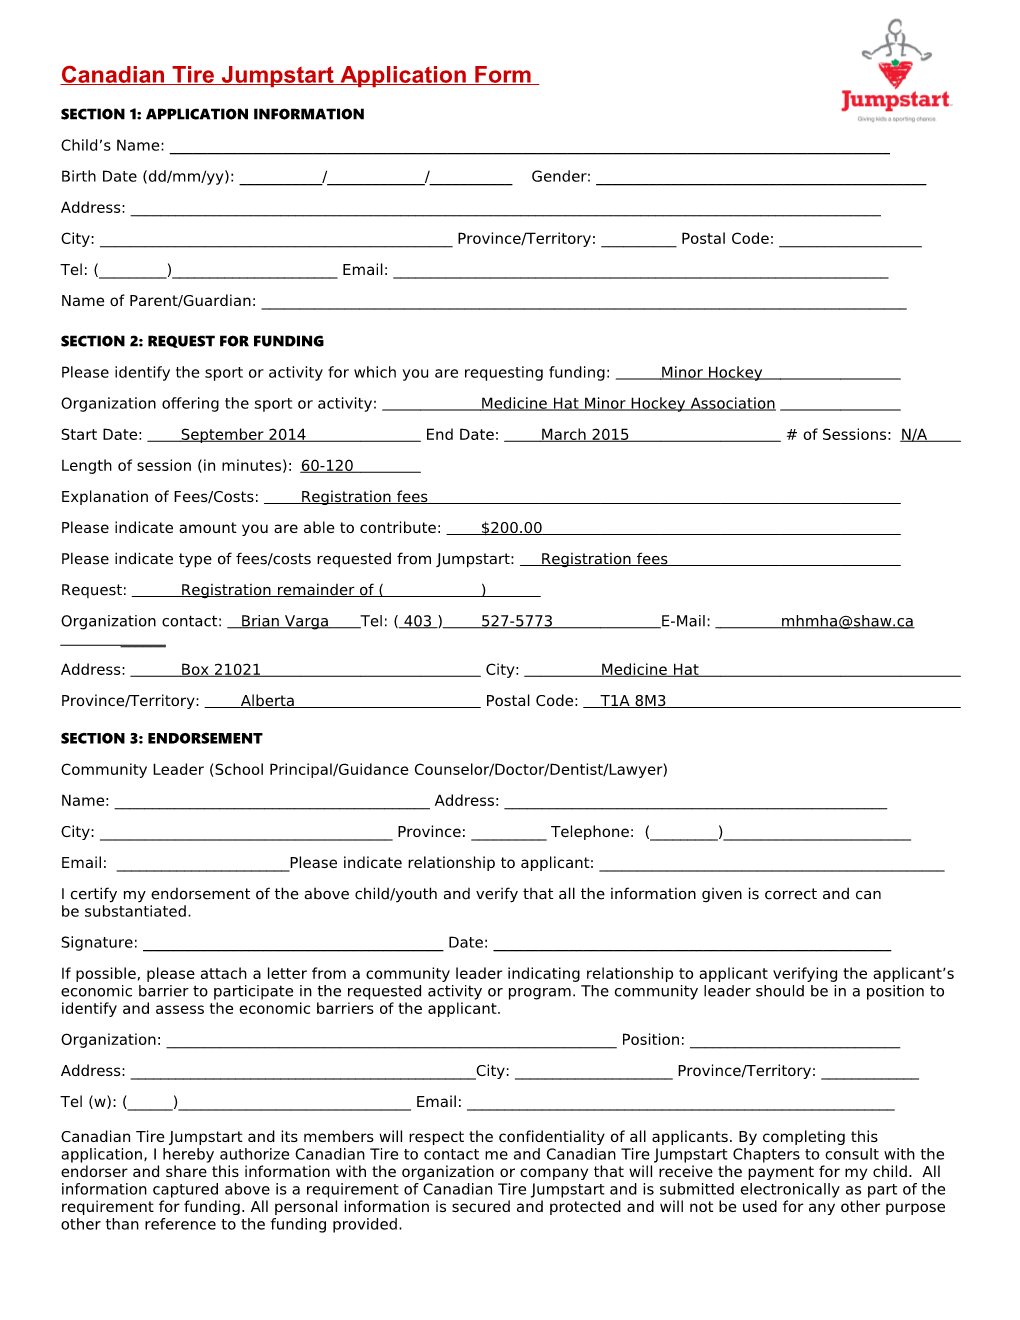 Appendix C: Canadian Tire Jumpstart Application Form